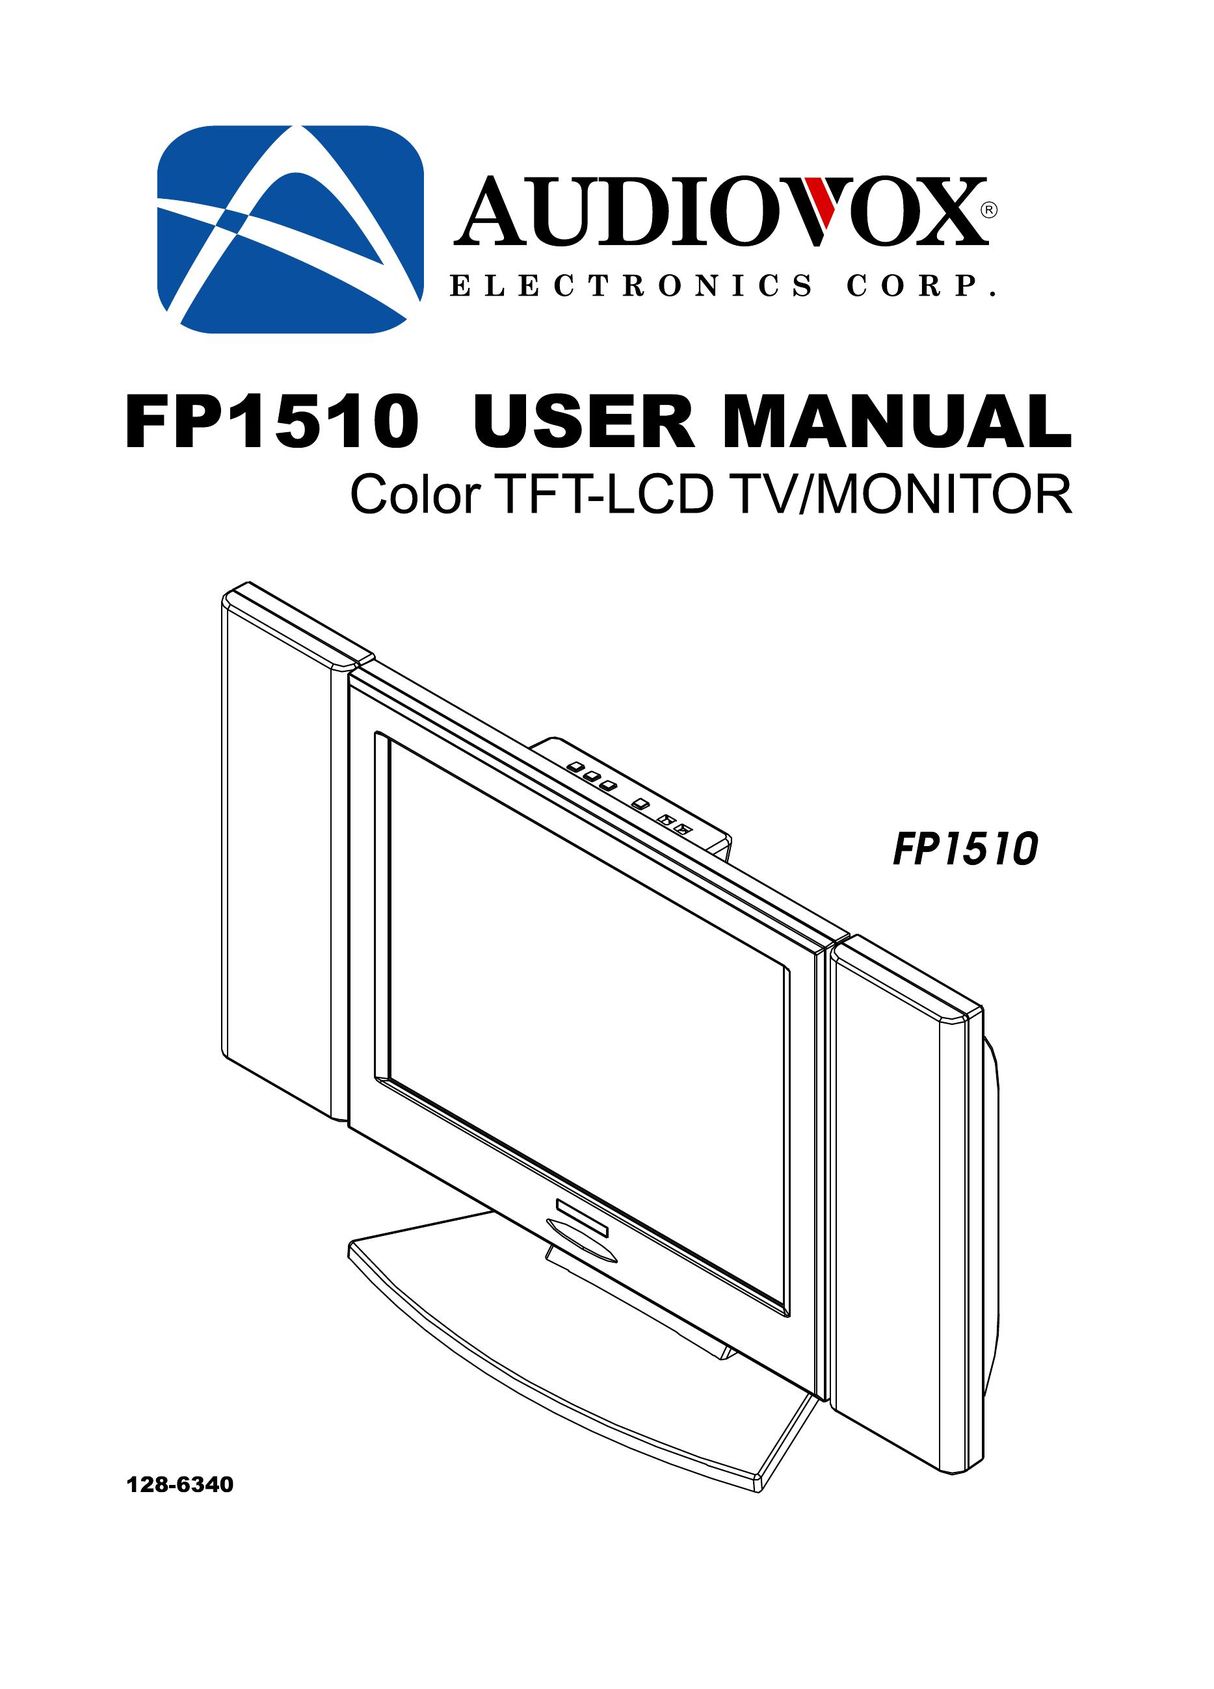 Audiovox FP1510 Flat Panel Television User Manual